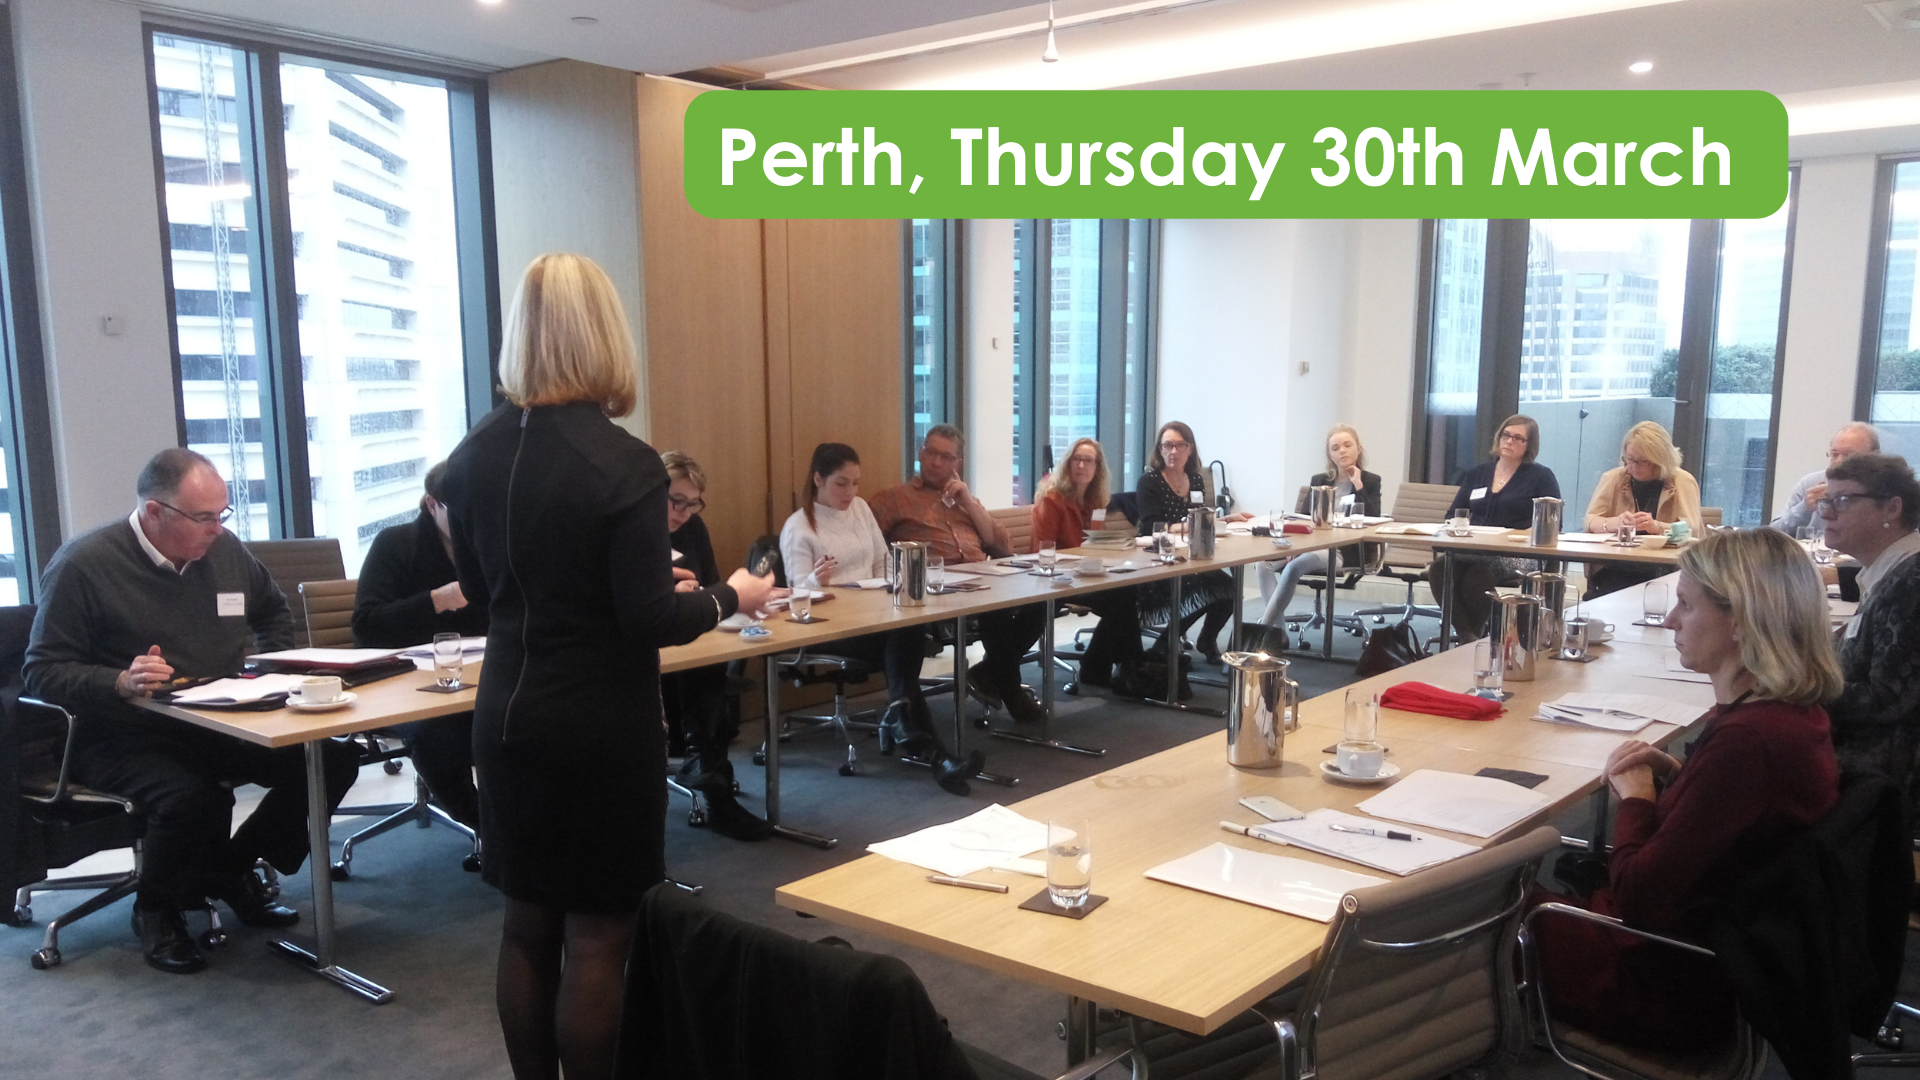 Best Practice Grant Seeking Workshop in action in Perth